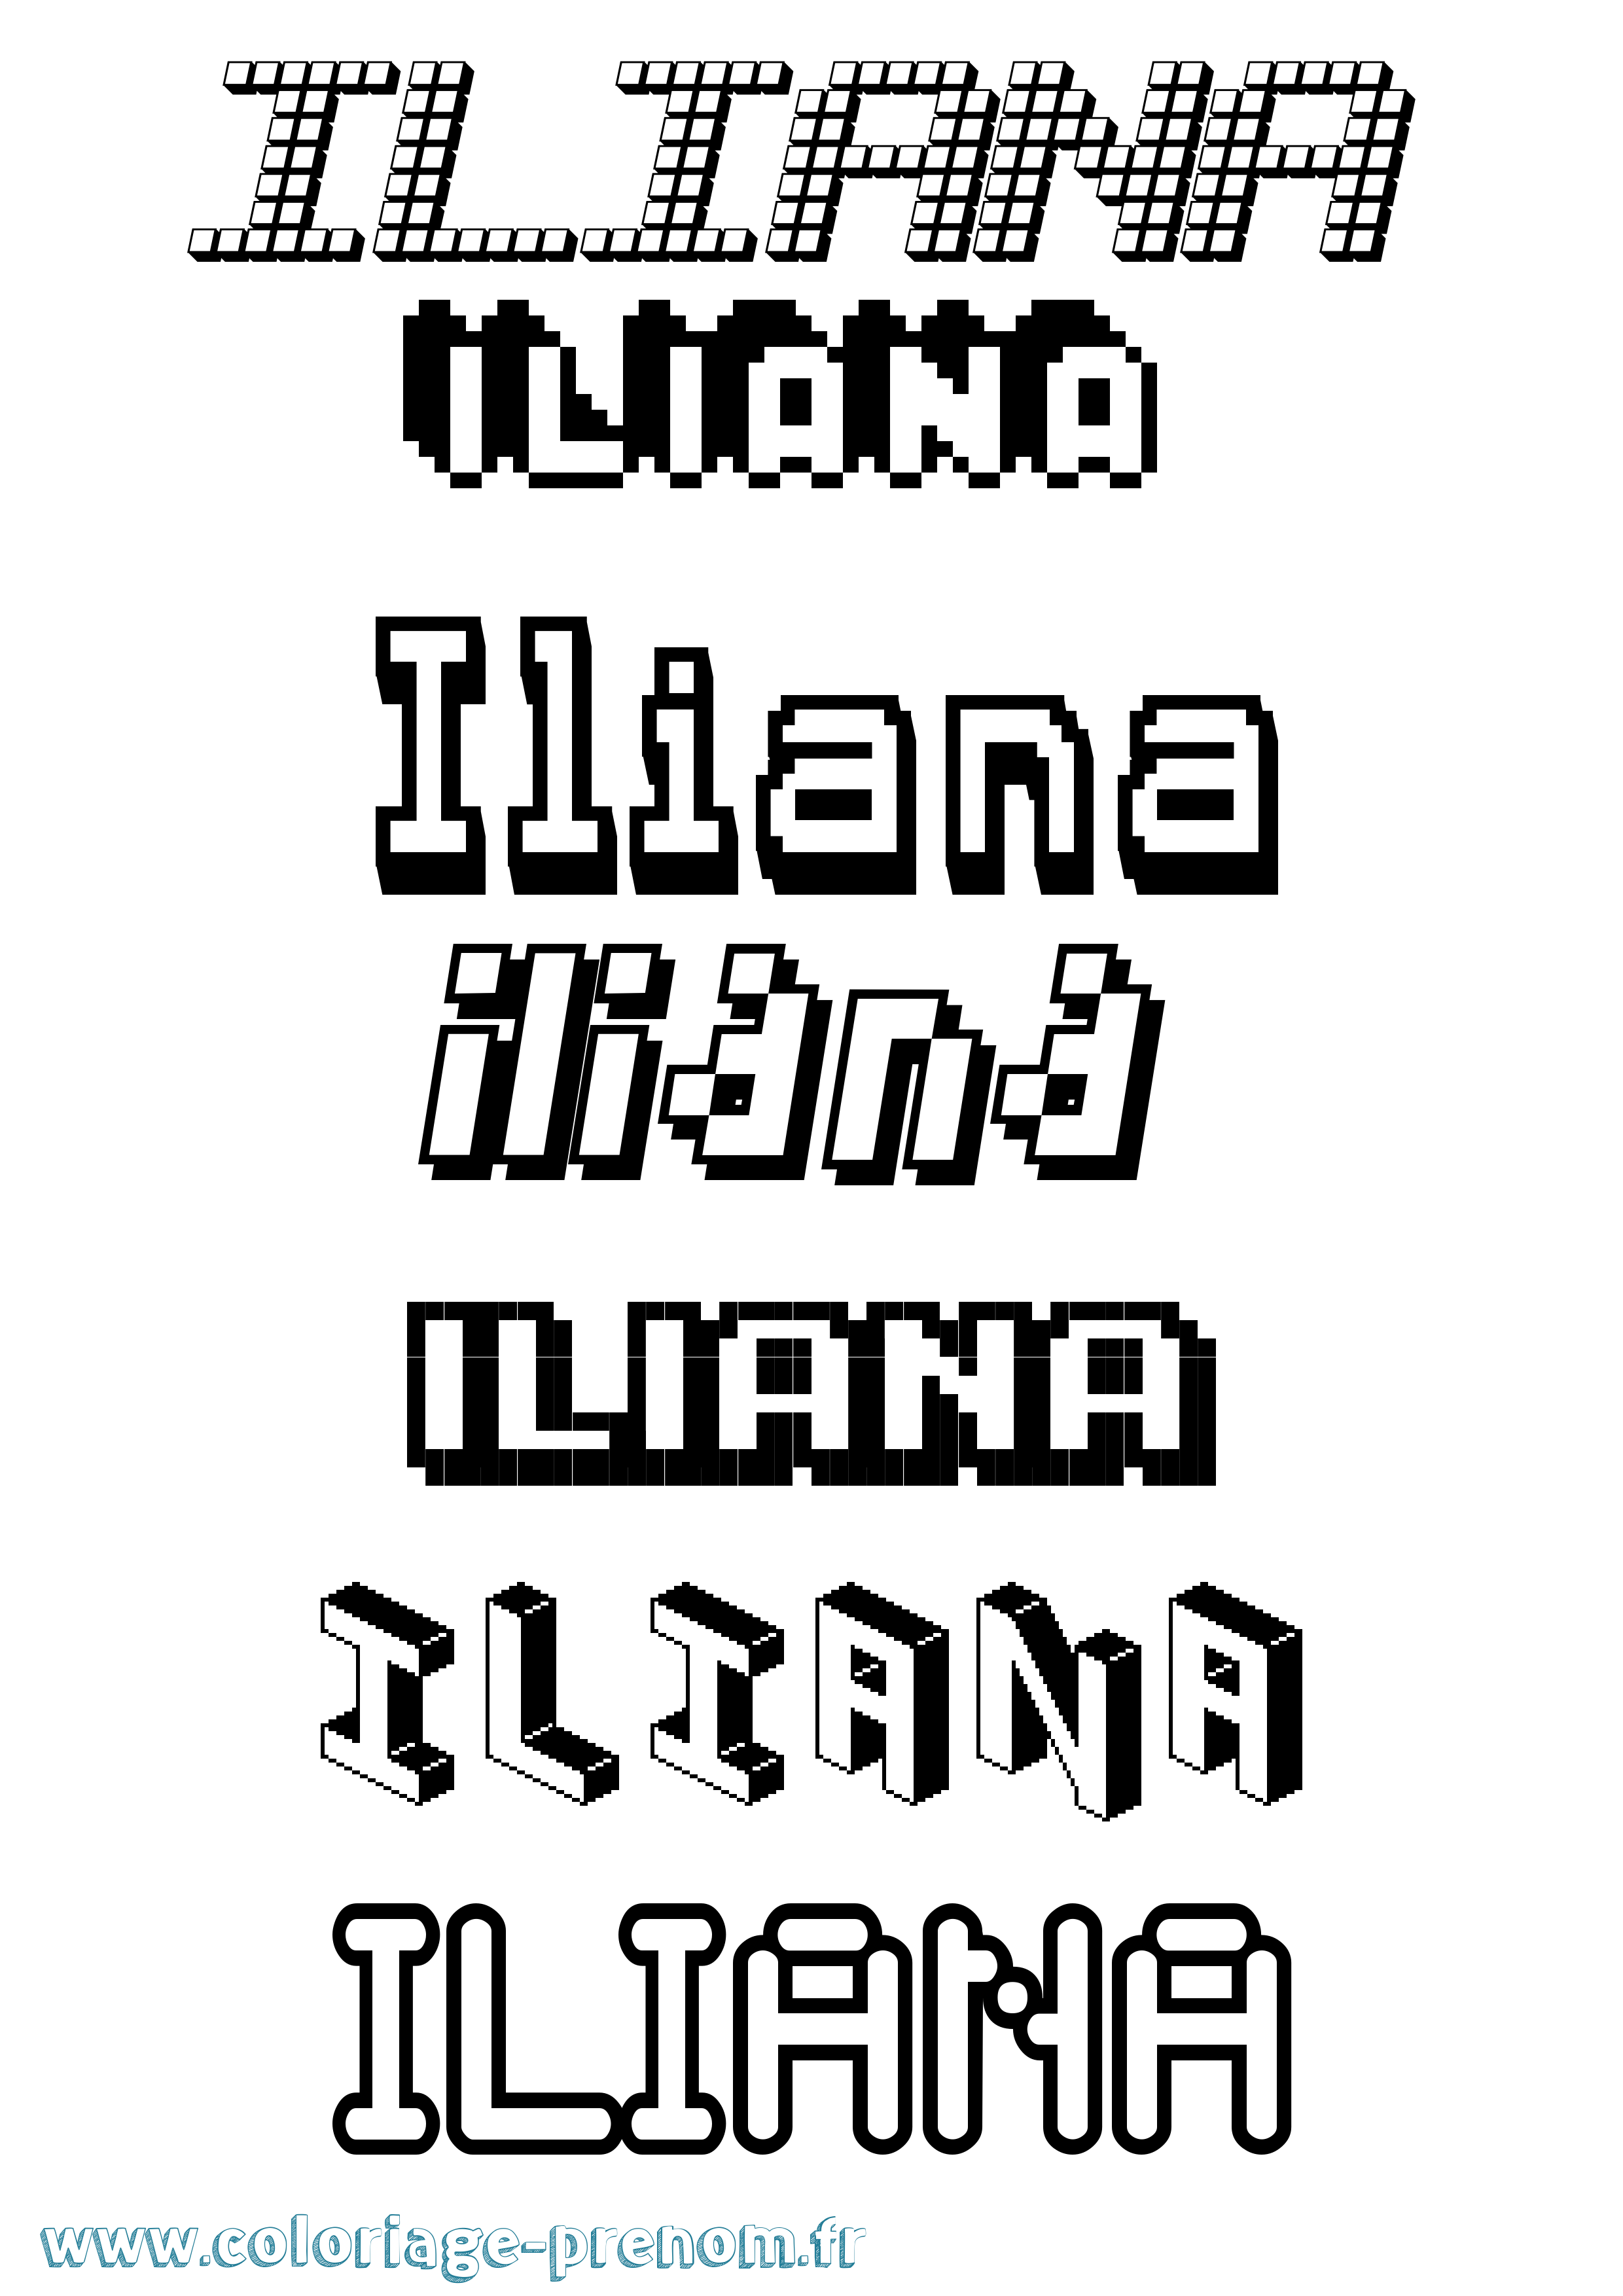 Coloriage prénom Iliana